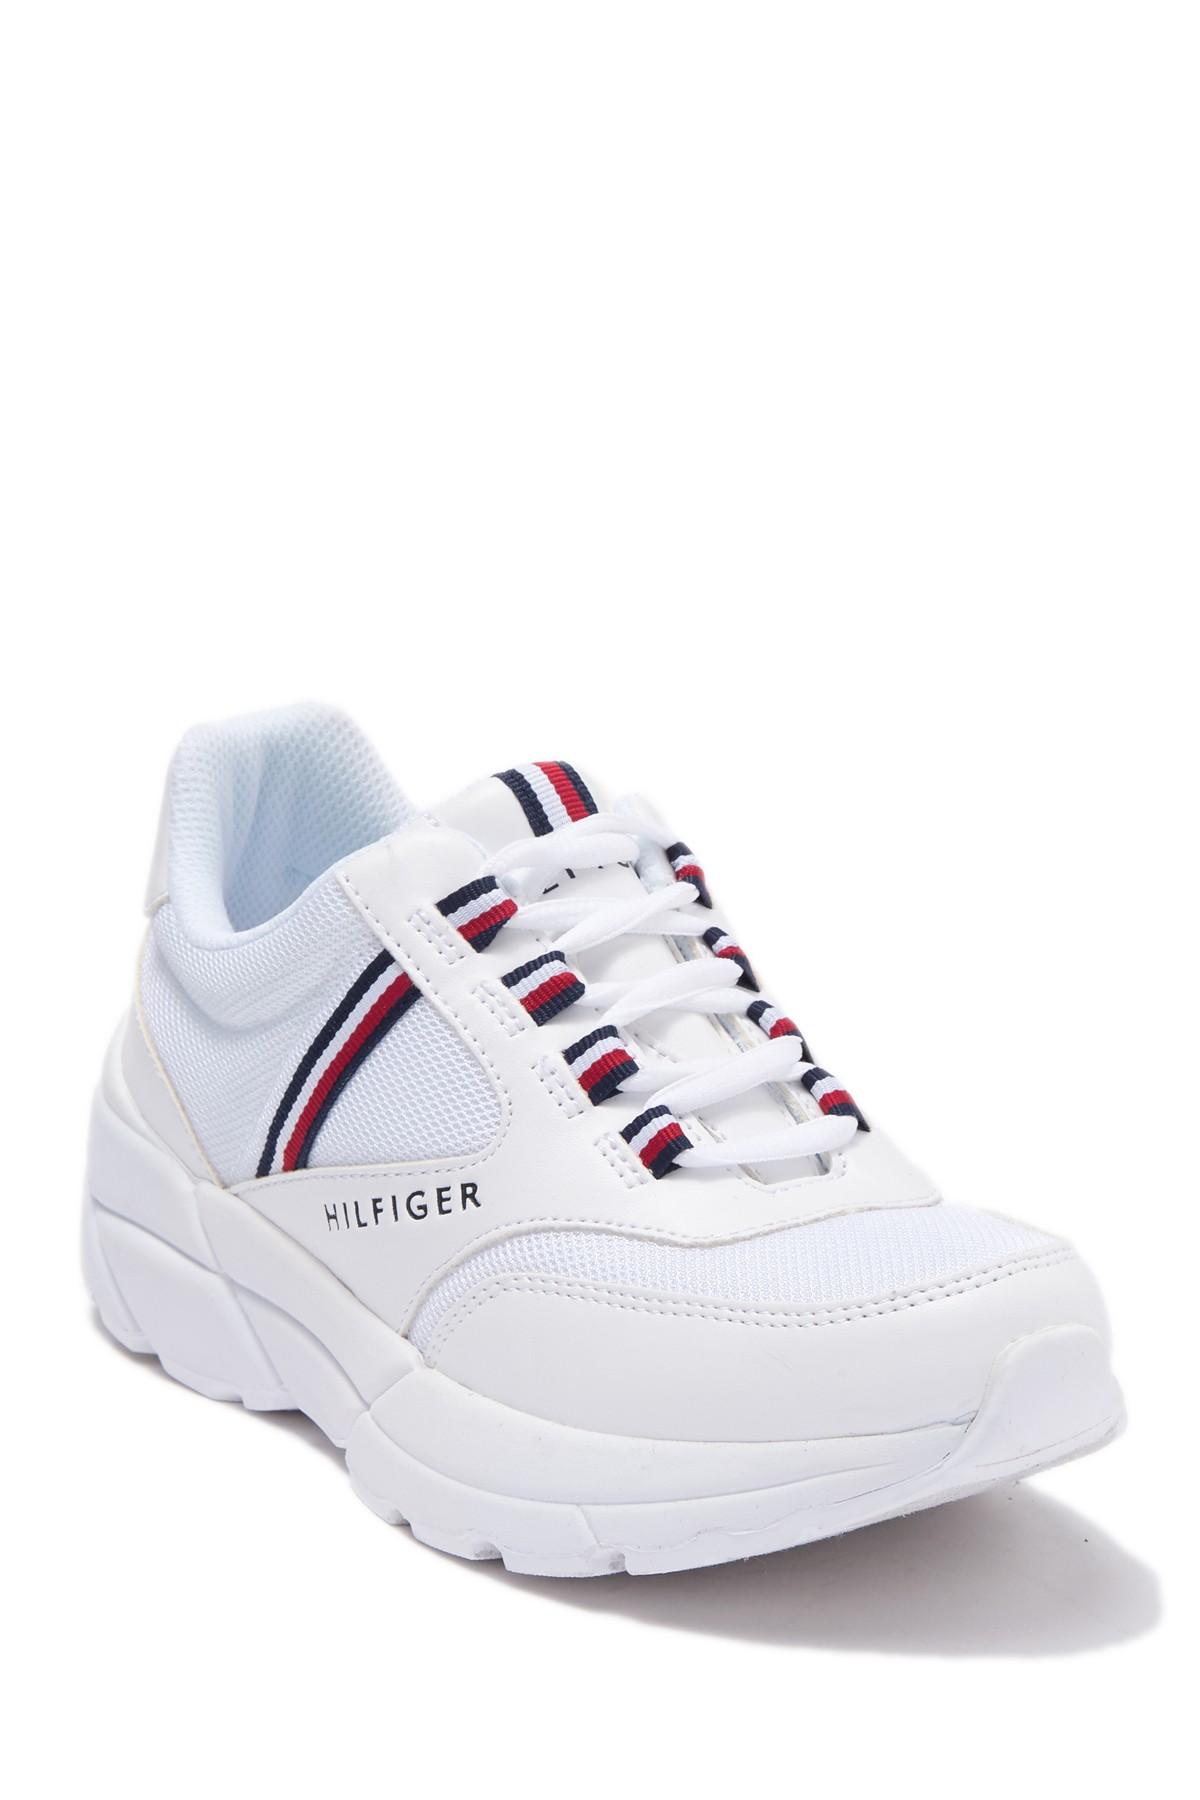 Tommy Hilfiger Ernie Sneaker in White | Lyst